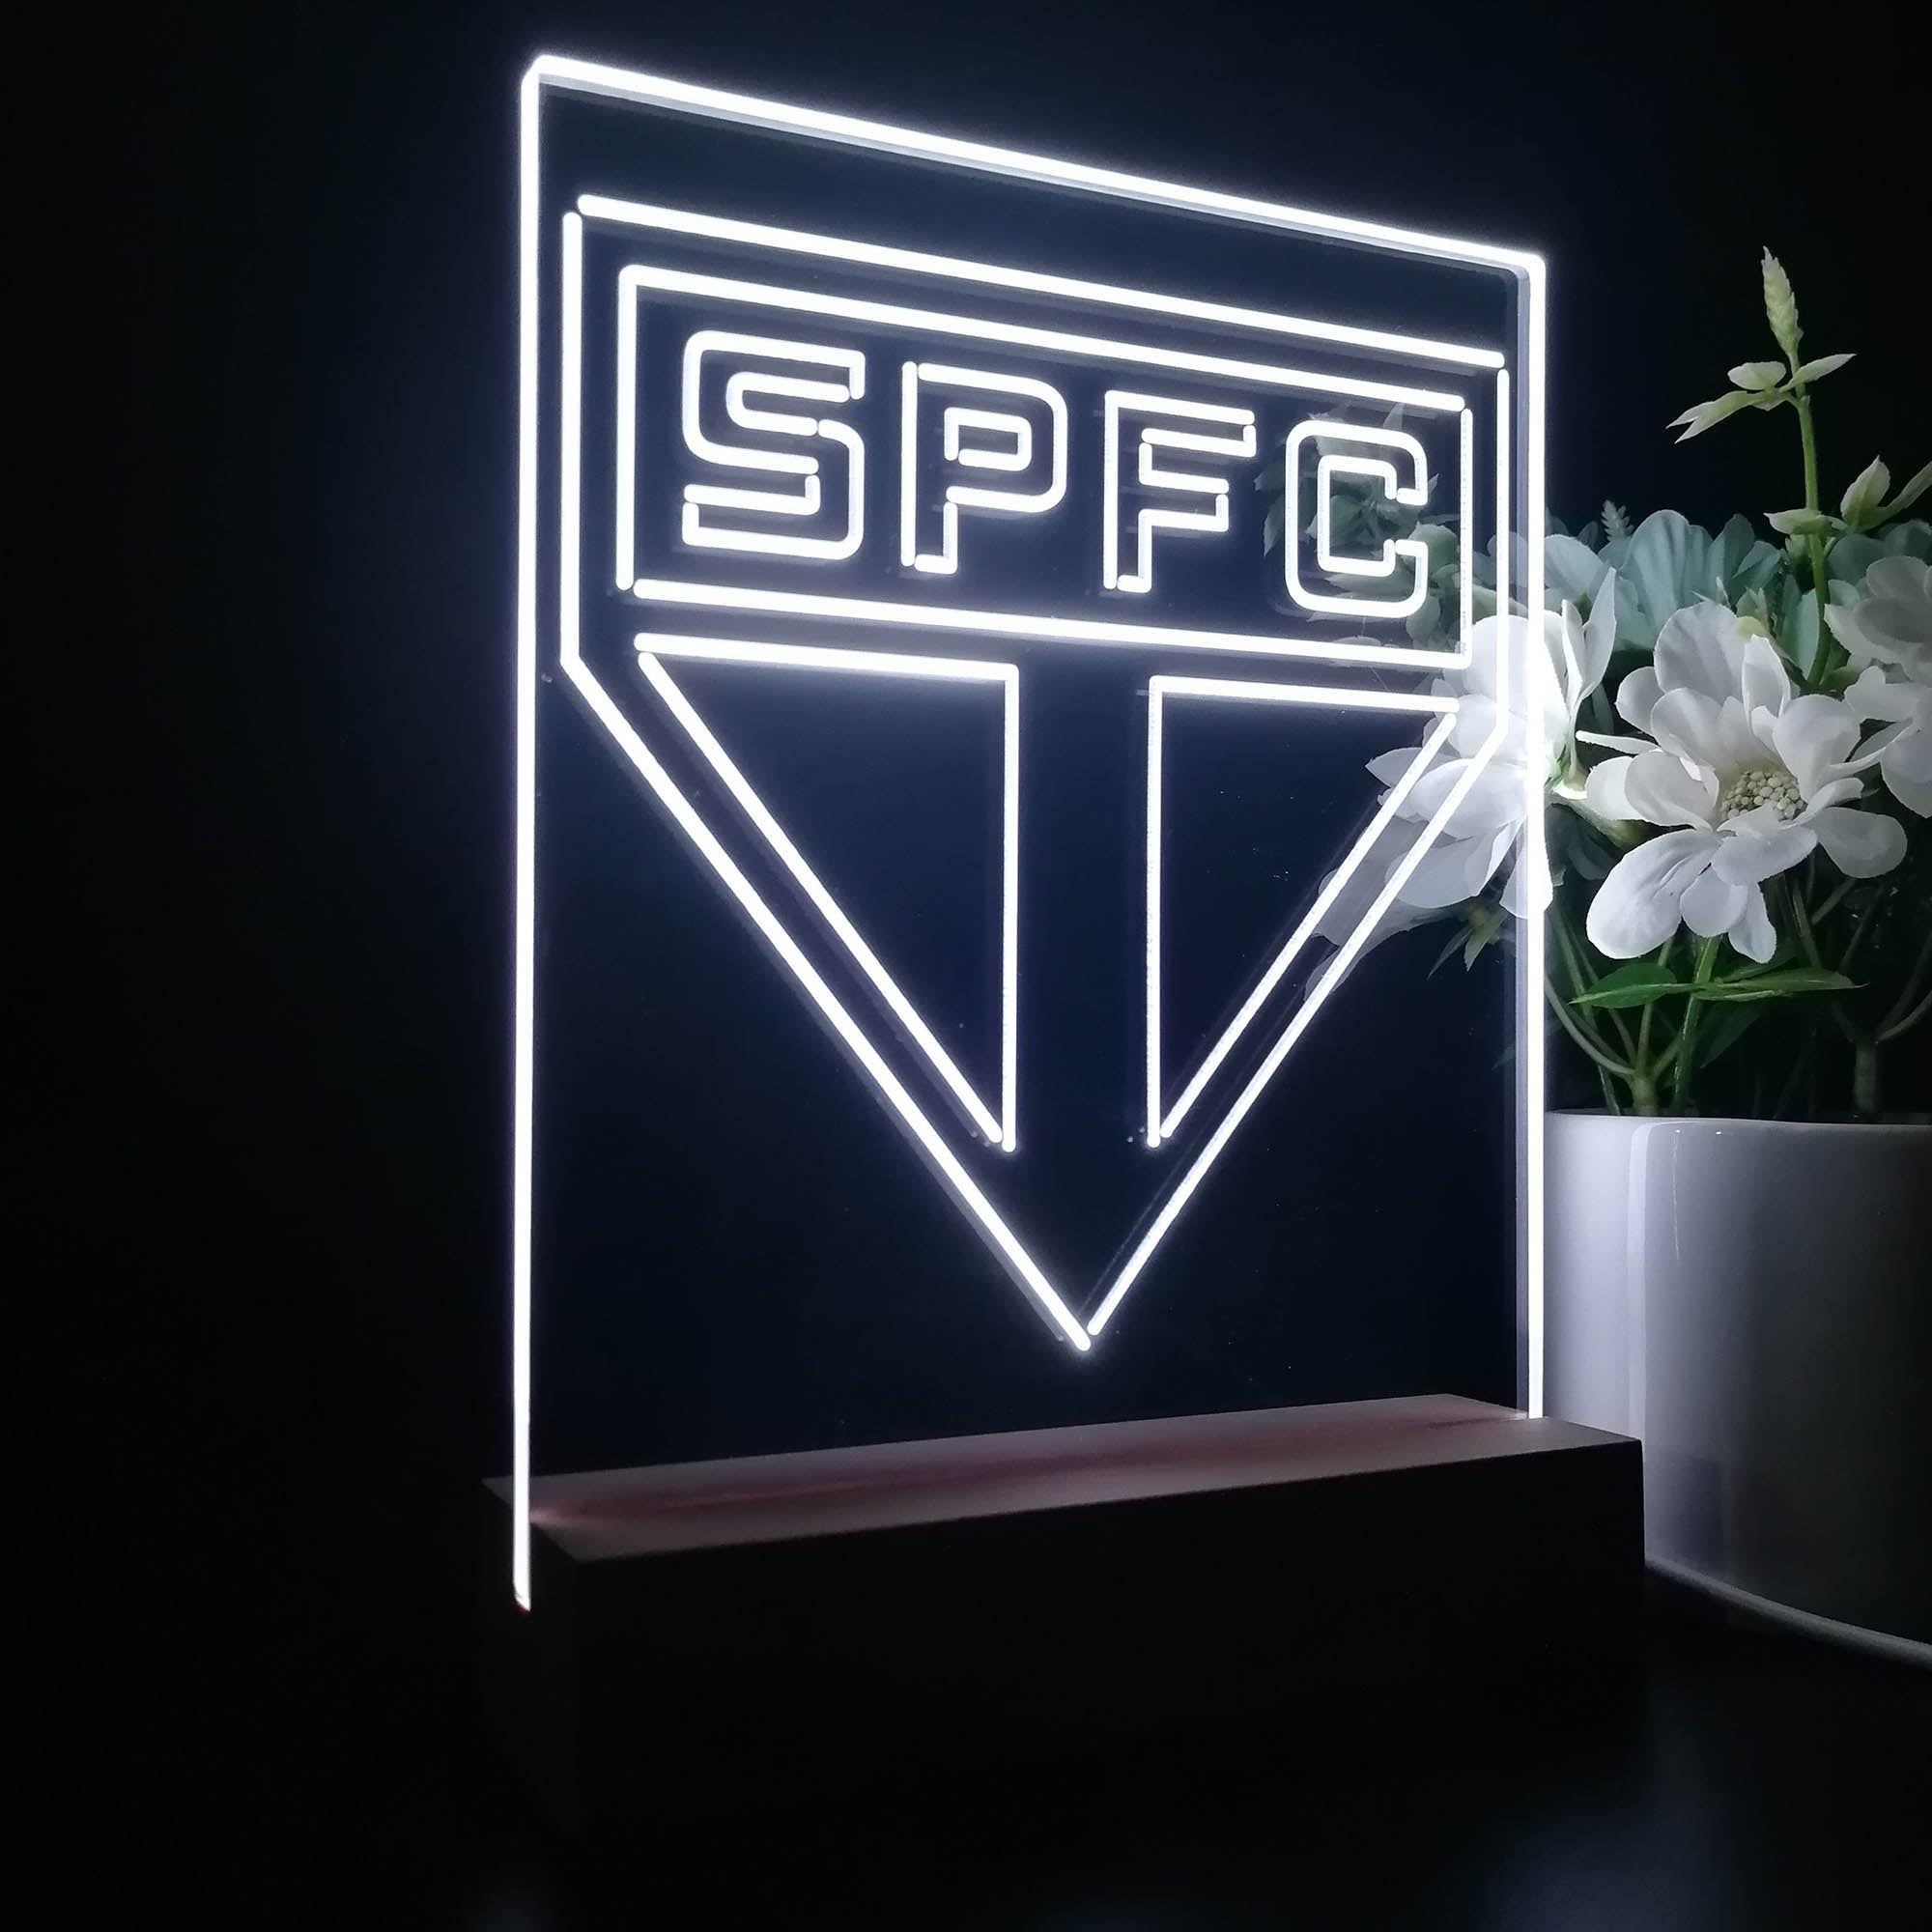 SPFC Club 3D LED Optical Illusion Sport Team Night Light